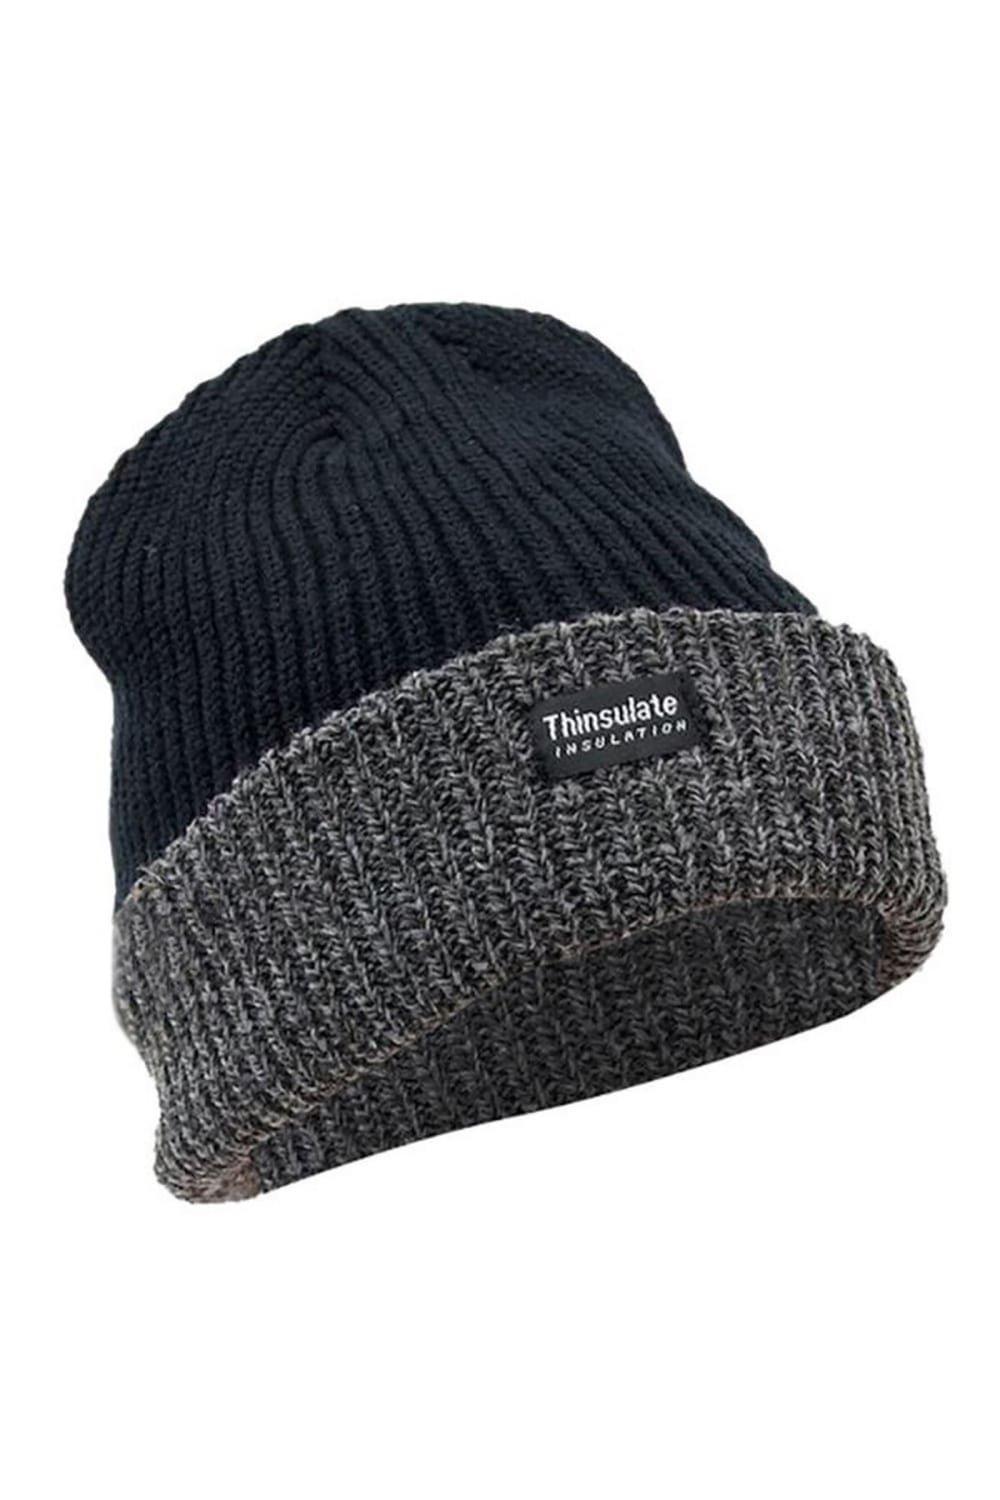 Зимняя/лыжная термошапка Thinsulate Heavy Knit (3M, 40 г) Floso, черный фото